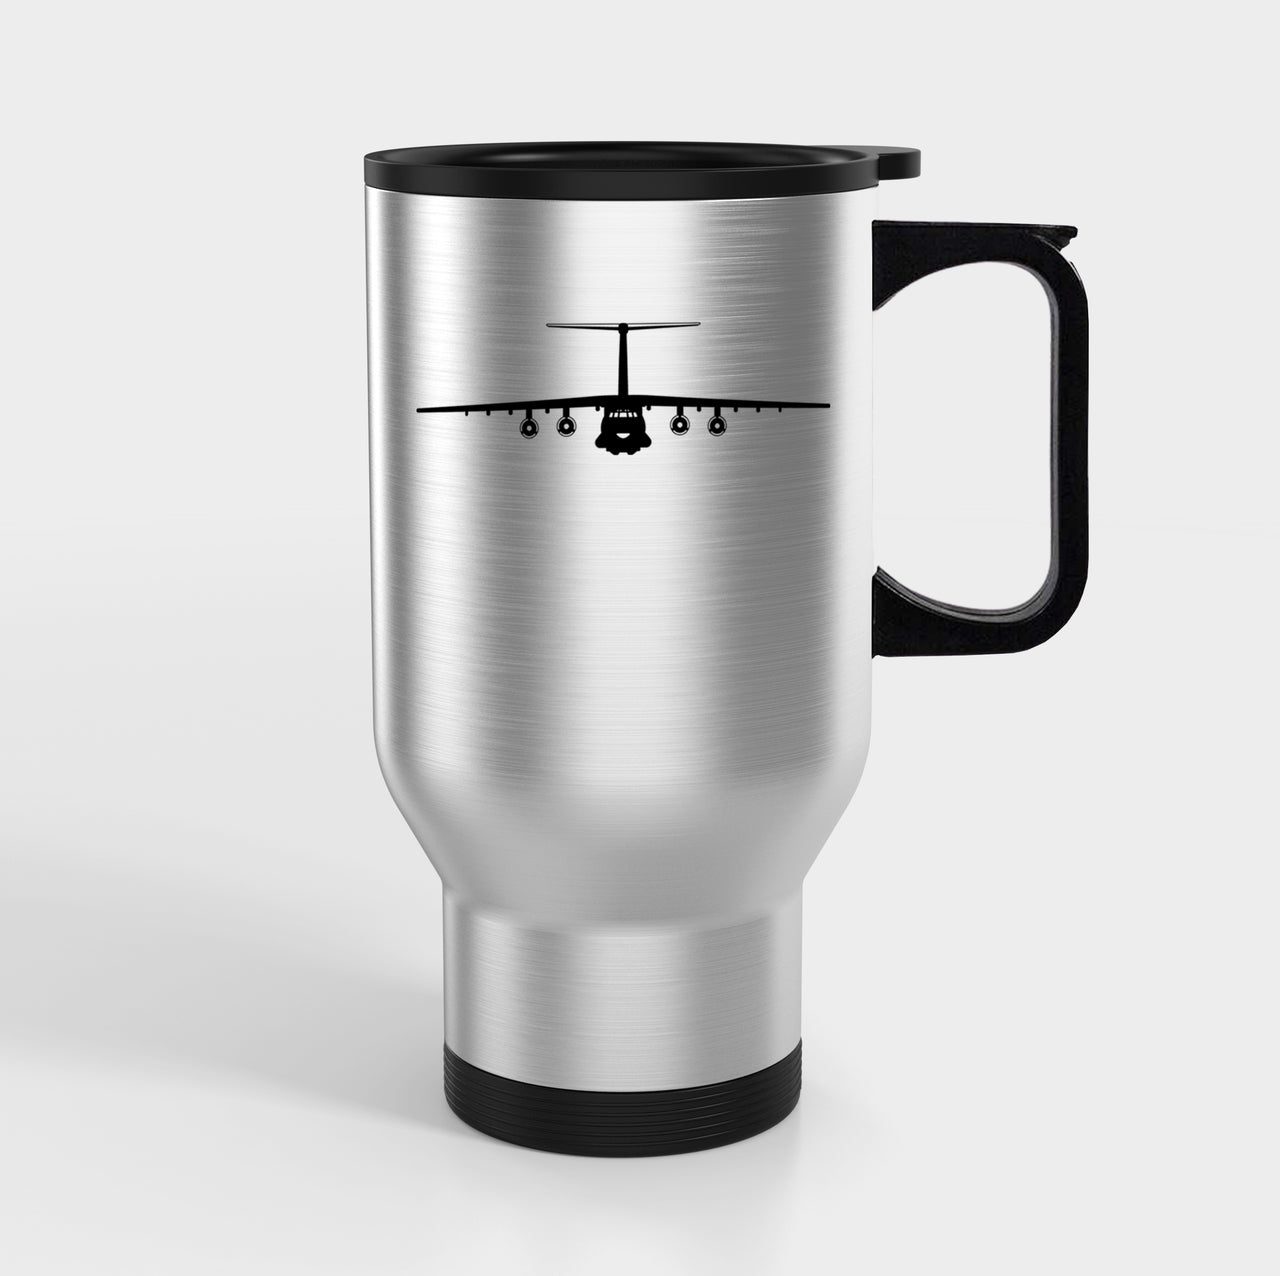 Ilyushin IL-76 Silhouette Designed Travel Mugs (With Holder)